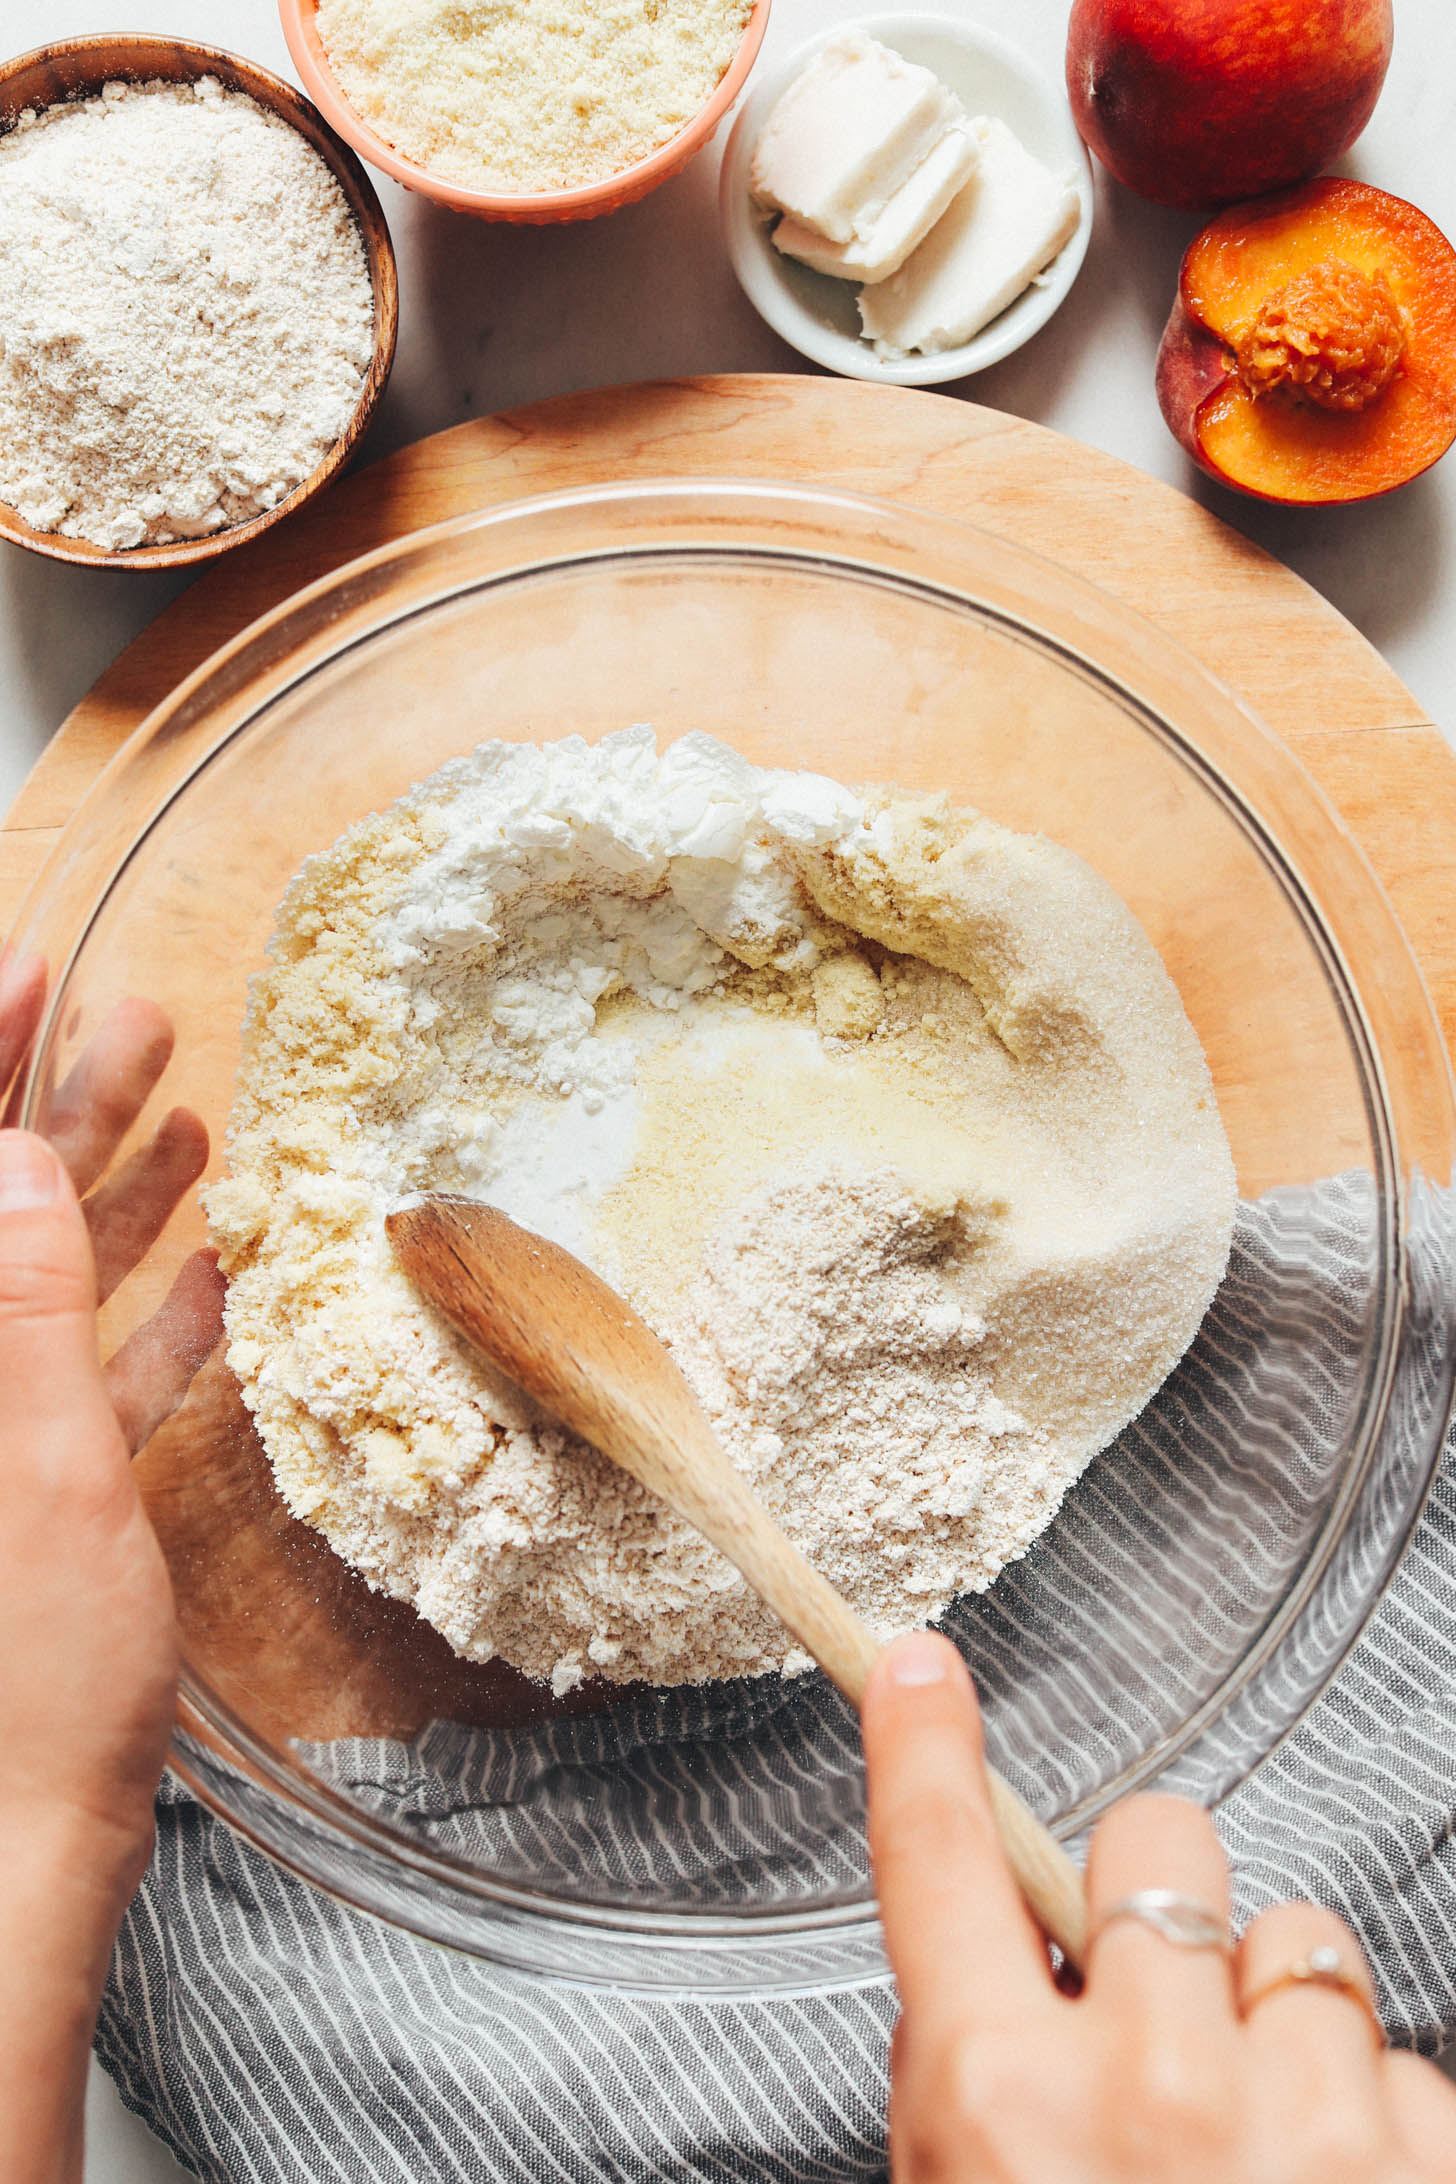 Mixing potato starch, almond flour, oat flour, baking powder, and cane sugar in a bowl